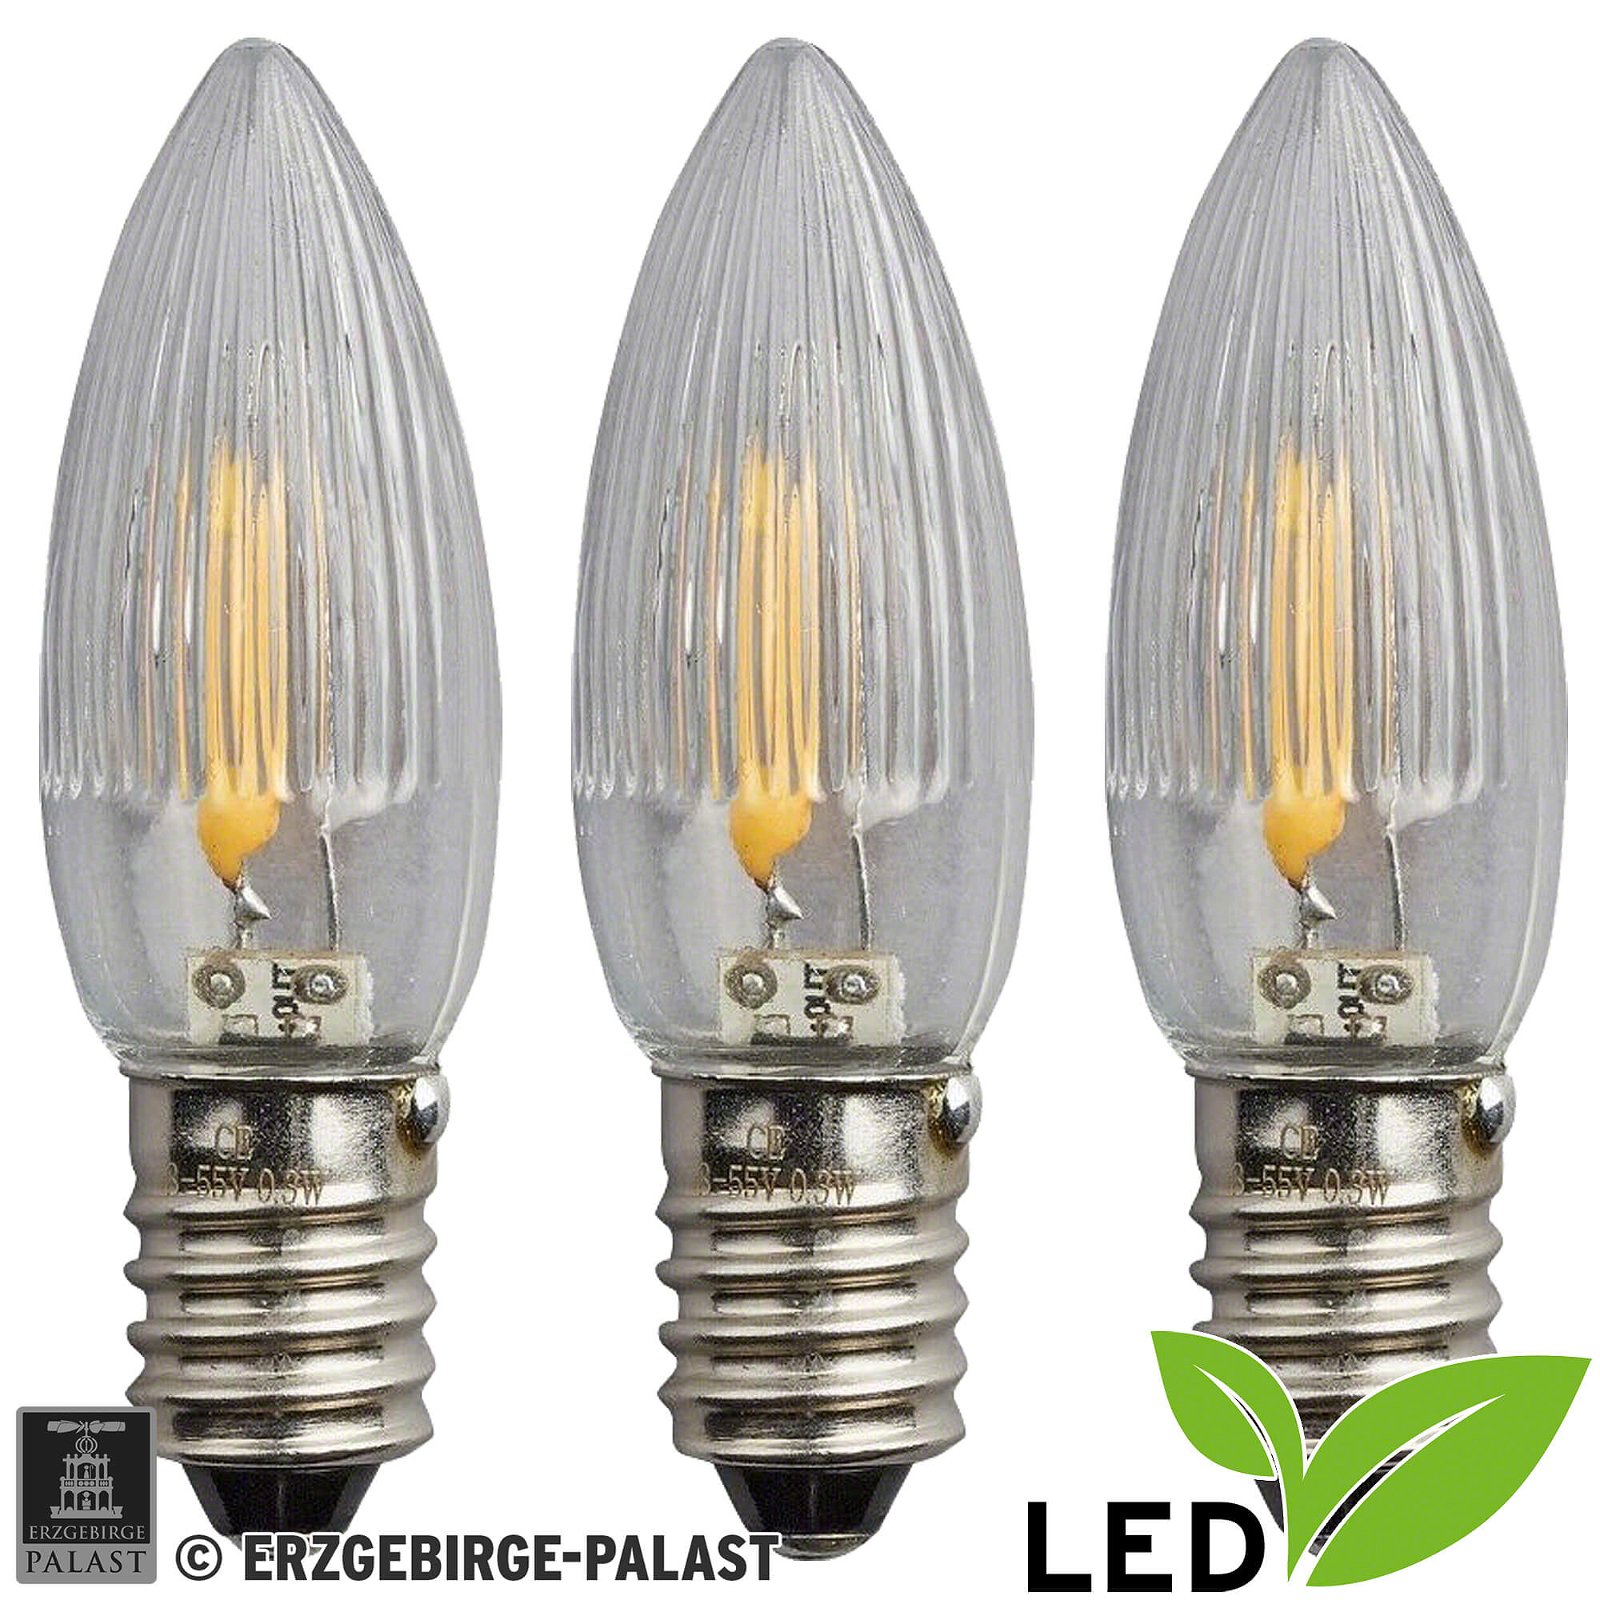 LED Rippled Filament - E10 Socket - by Erzgebirge-Palast